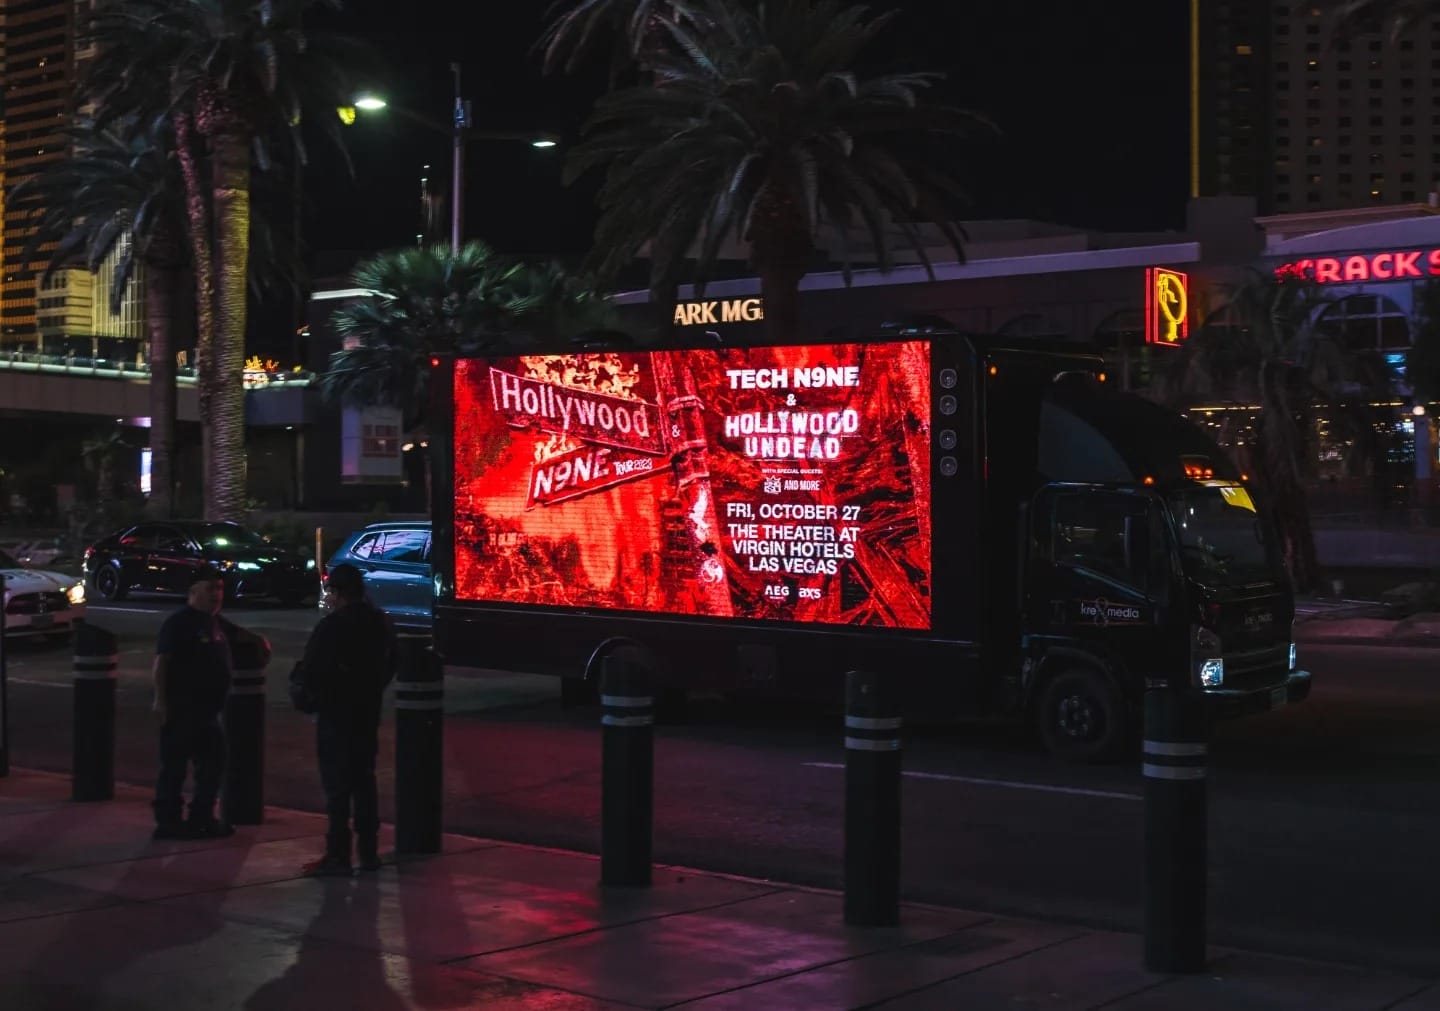 Tech N9ne & Hollywood Undead Live at Virgin Hotels Las Vegas